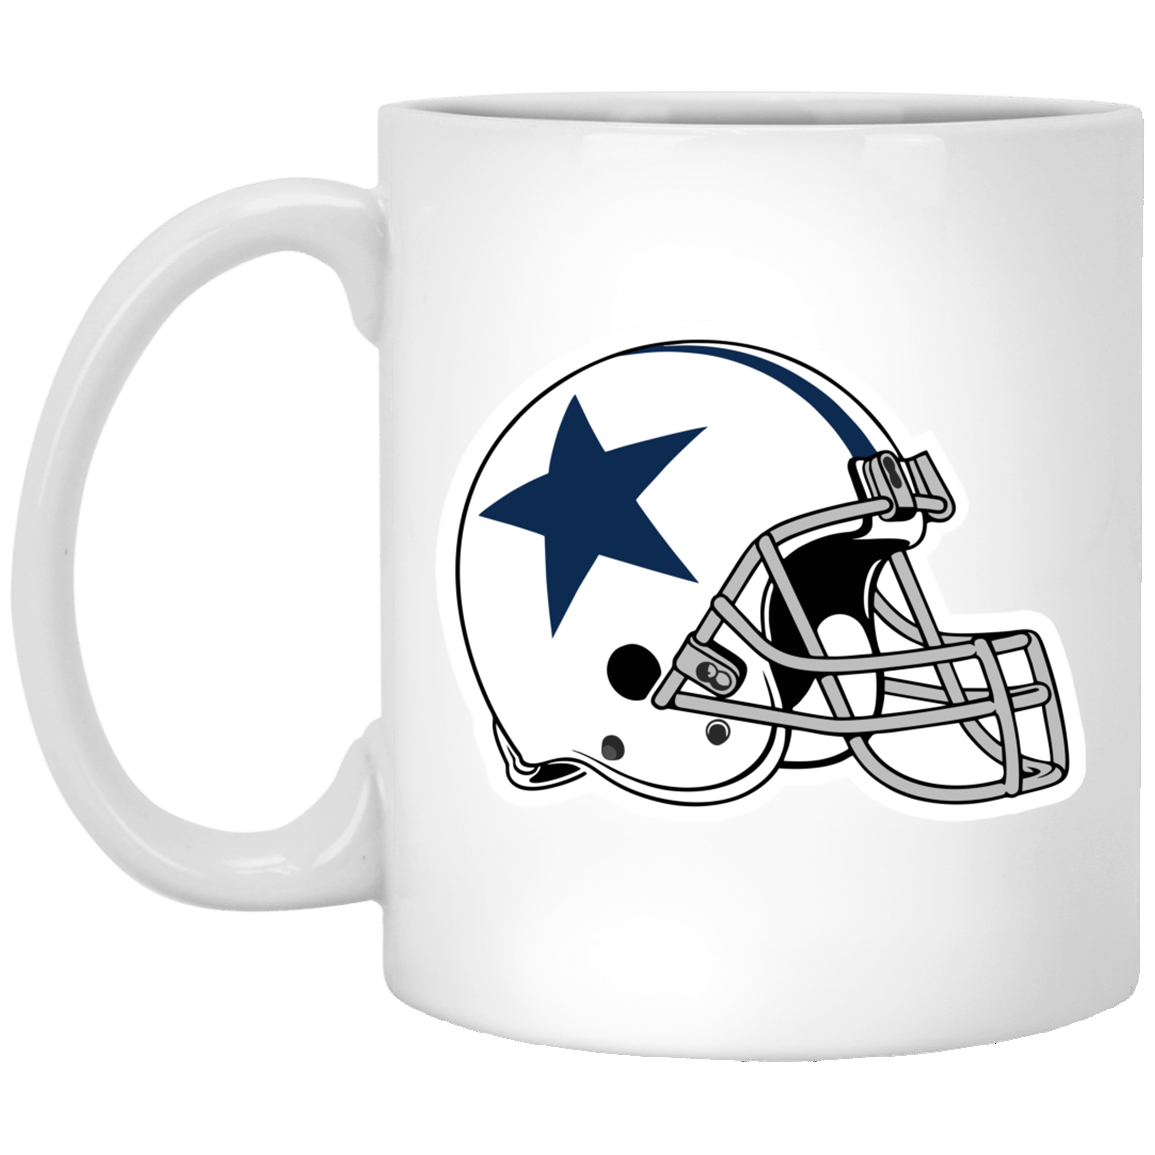 Dallas Cowboys 15oz Cafe Mug